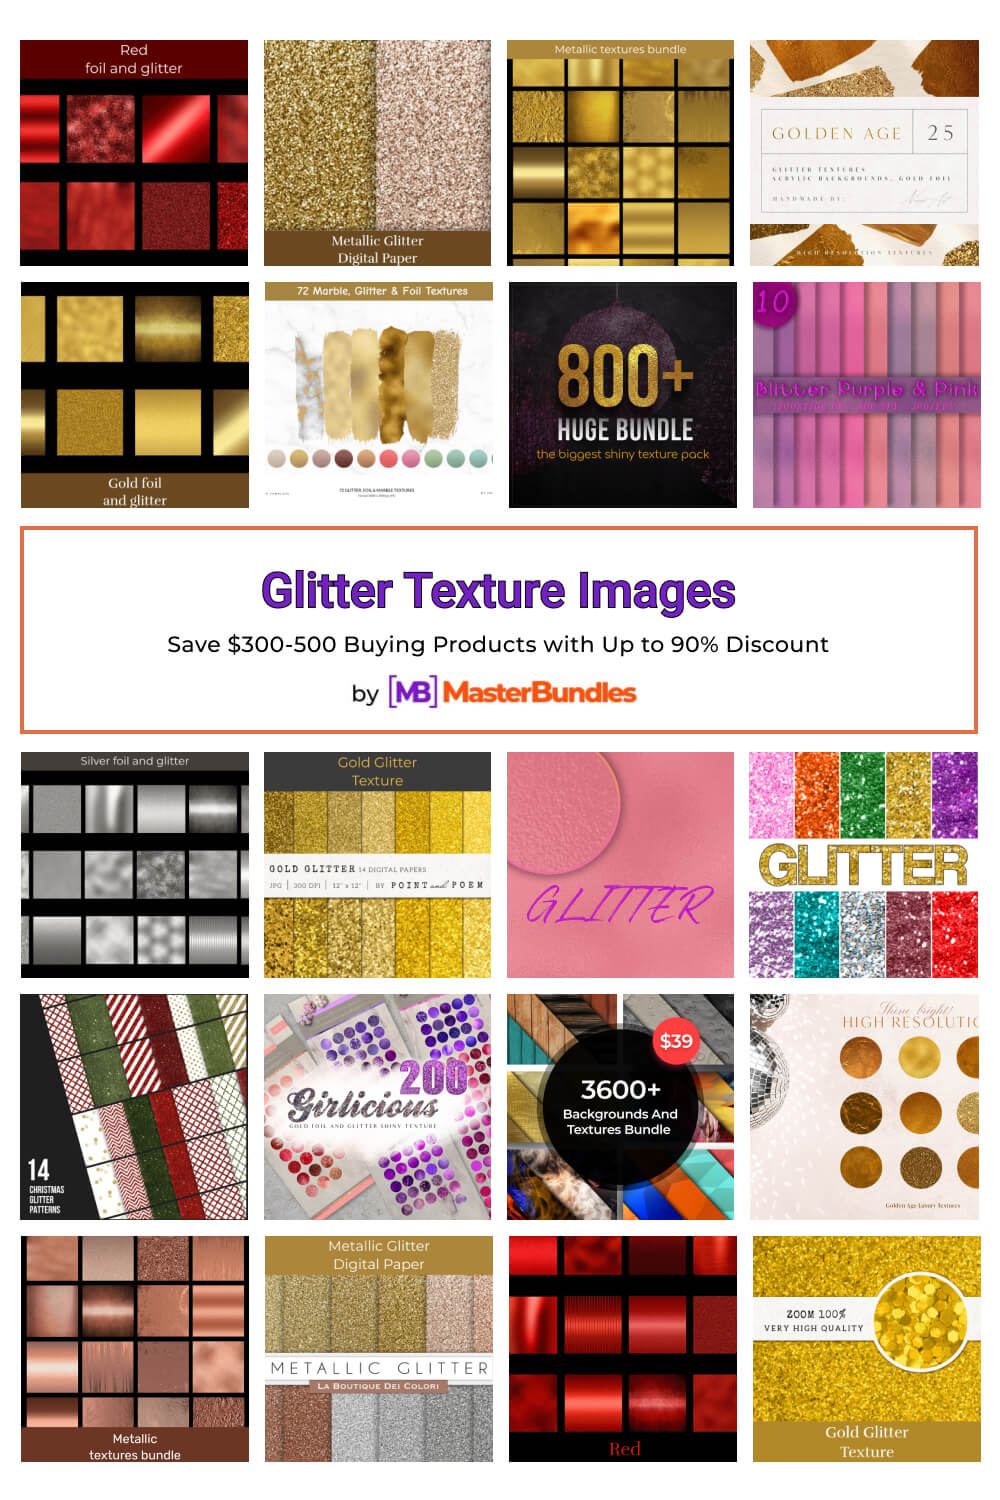 glitter texture images pinterest image.